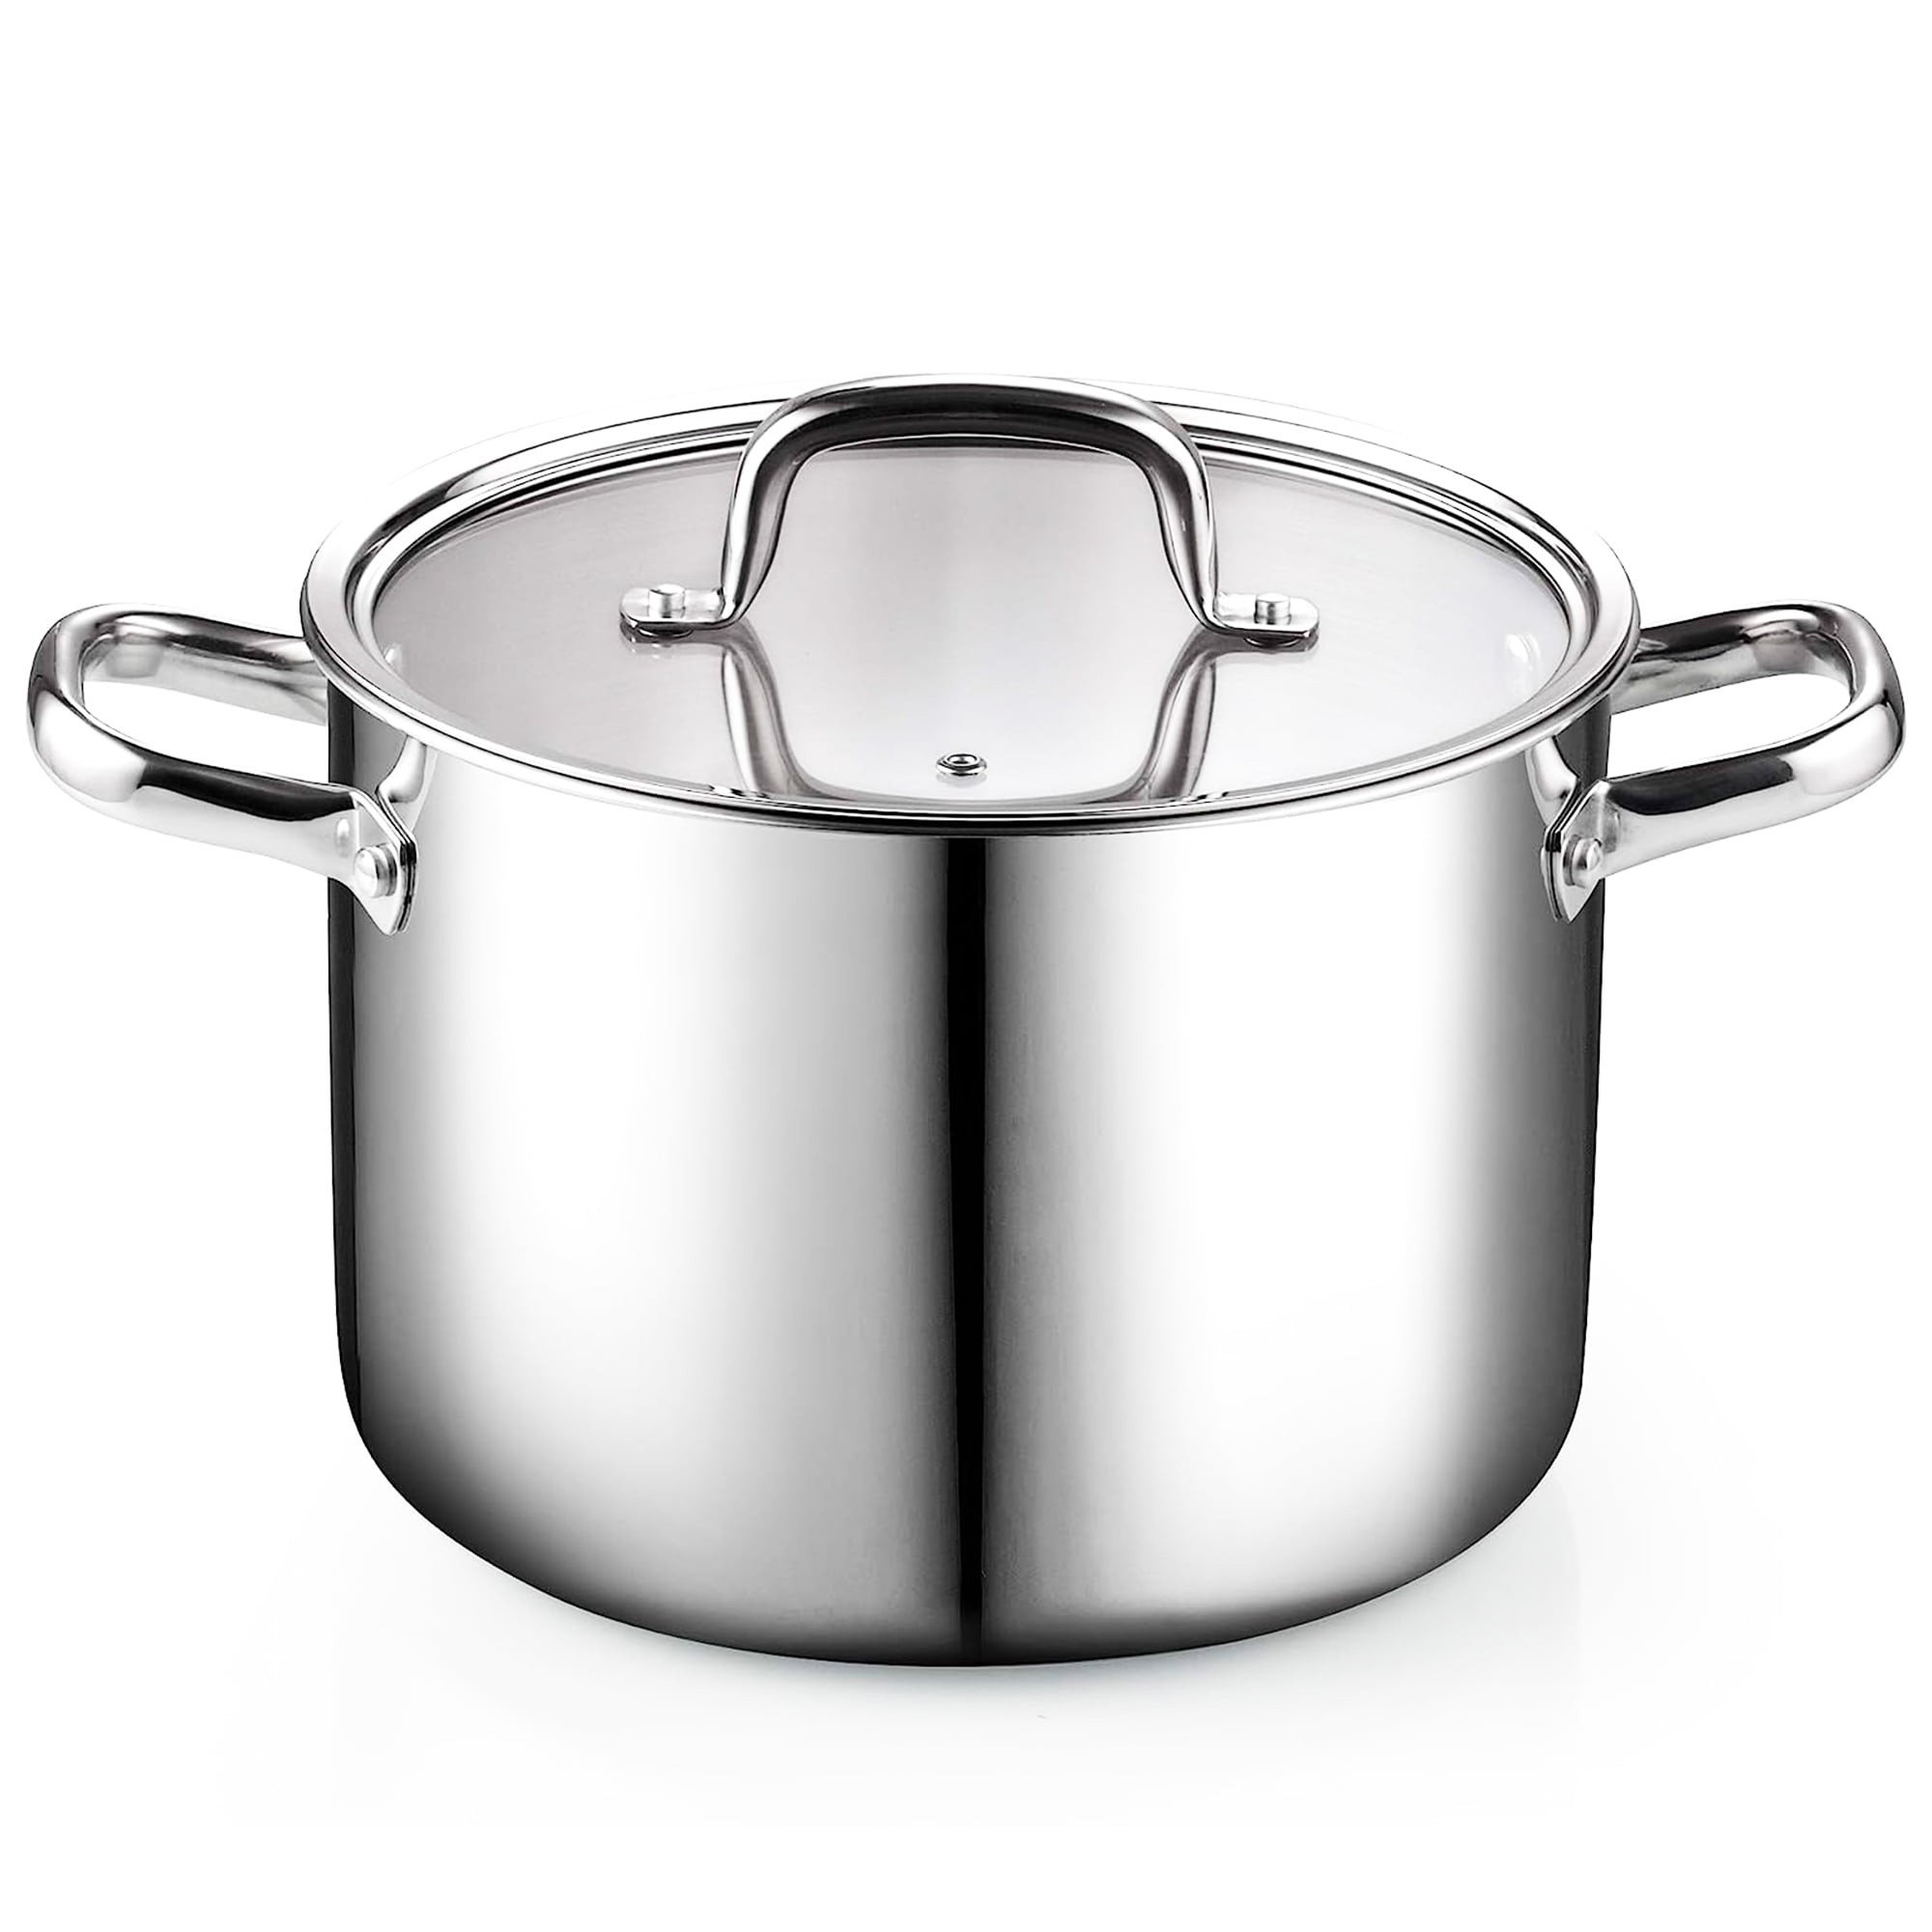 GoodCook® Stainless Steel Saucepan with Lid - Silver / Black, 1 - Kroger